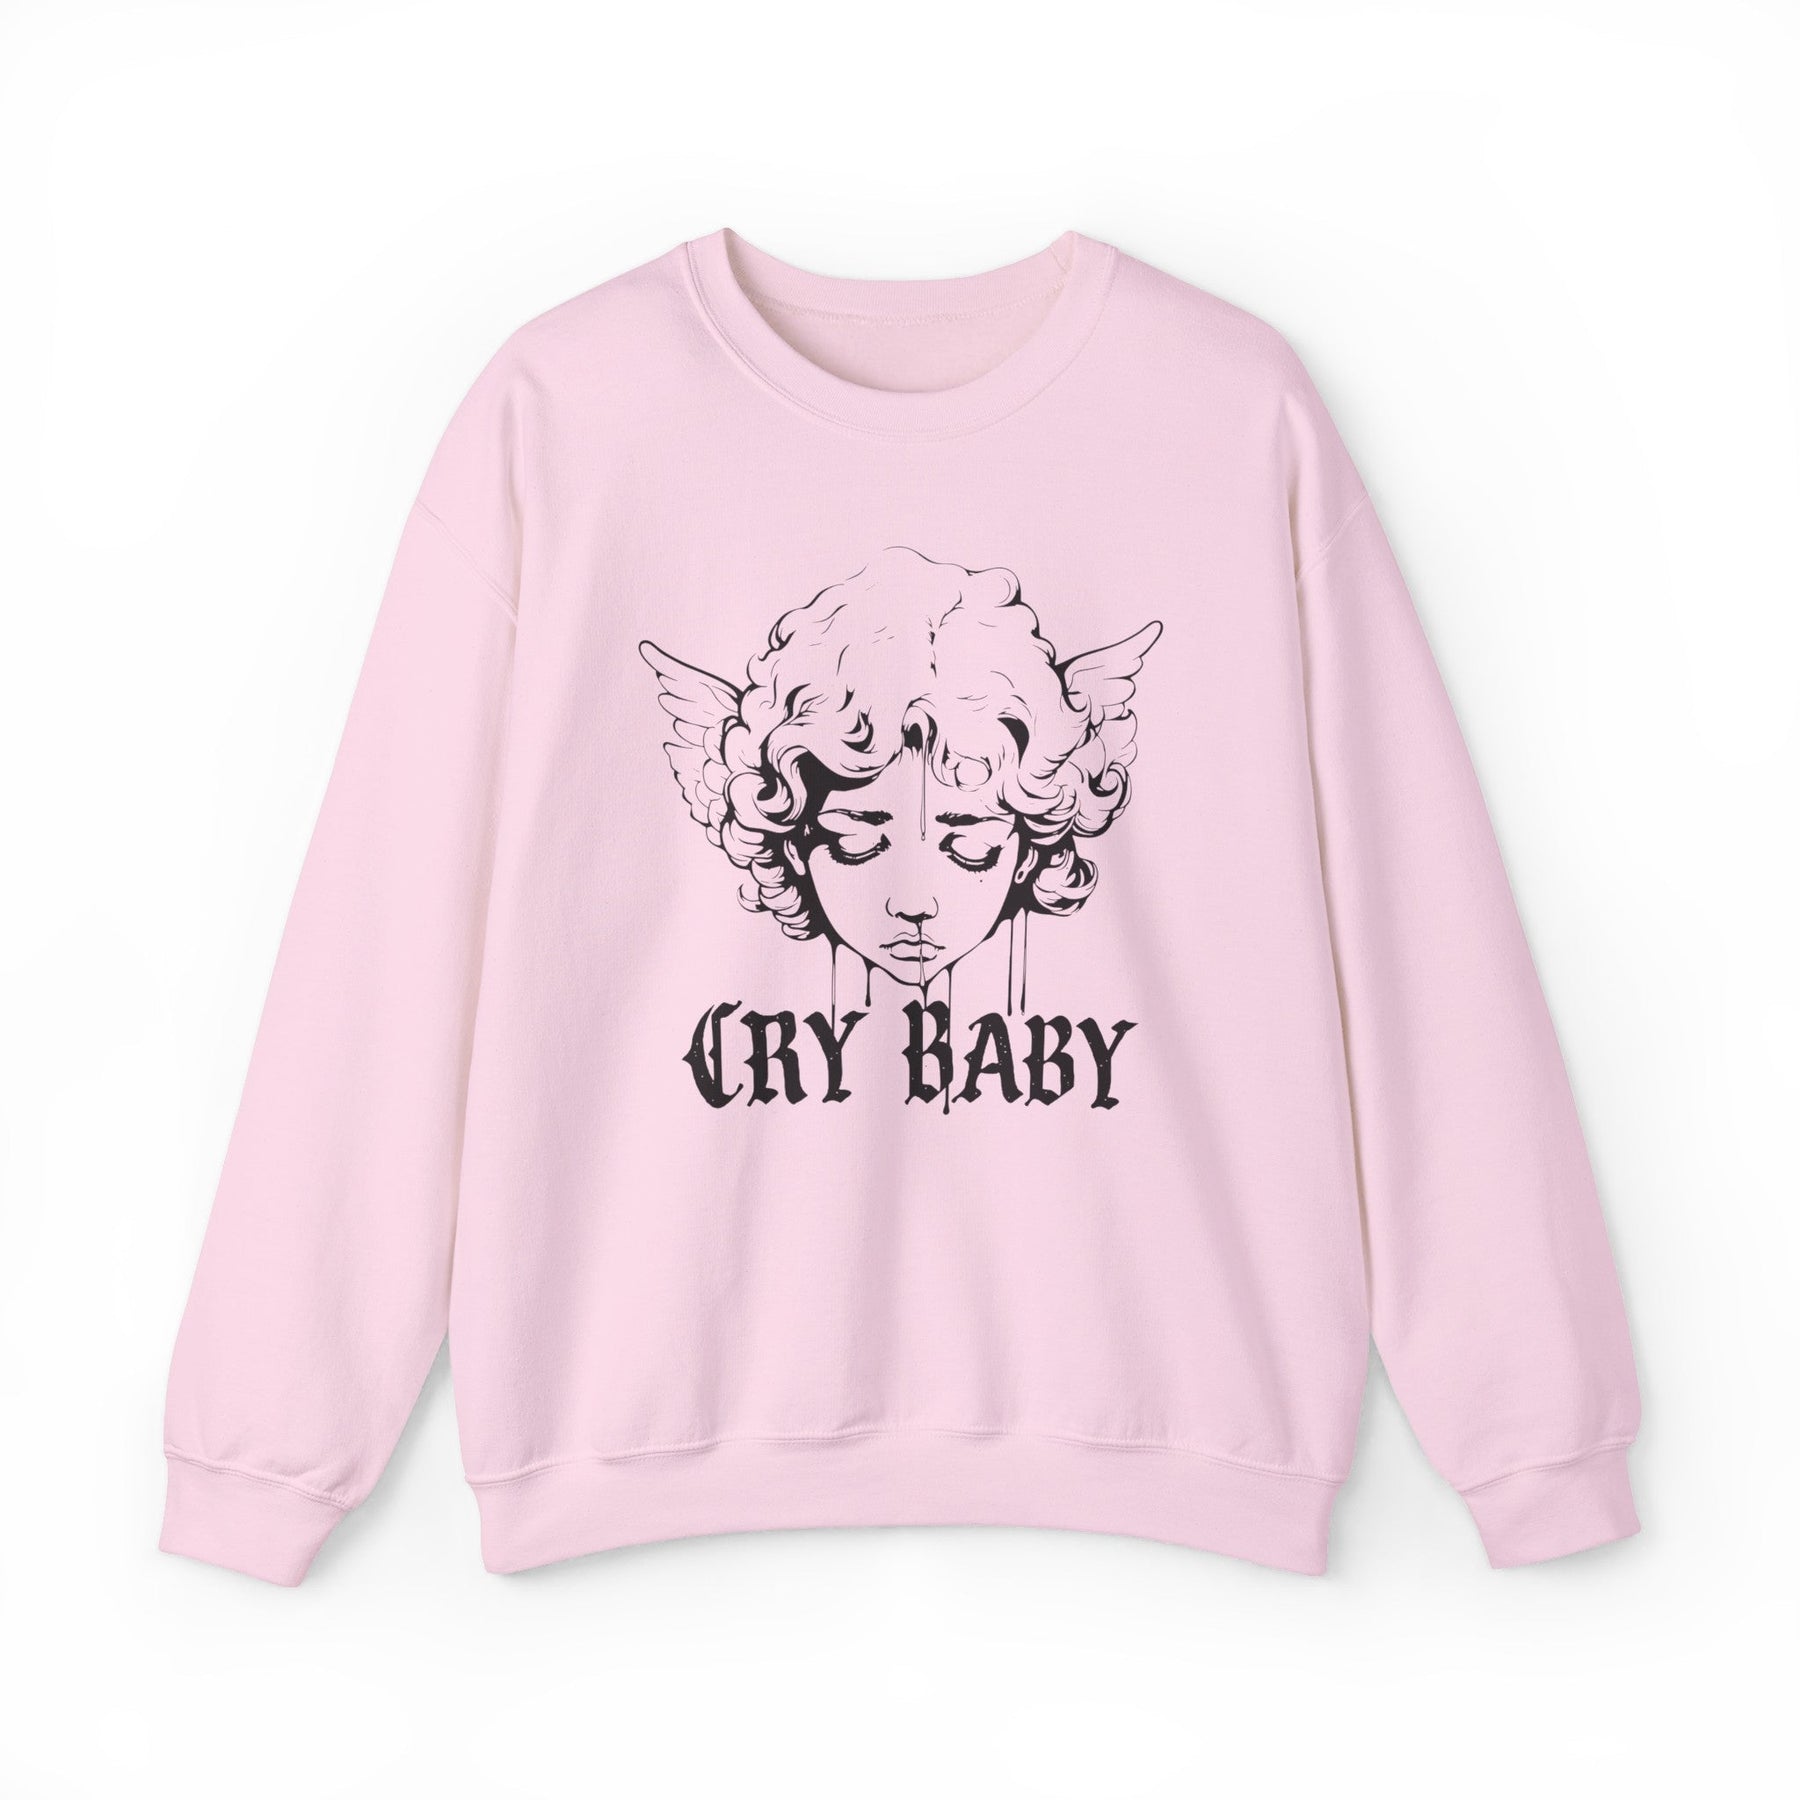 Crybaby Graffiti Cherub Crew Neck Sweatshirt - Goth Cloth Co.Sweatshirt10314502239311094272